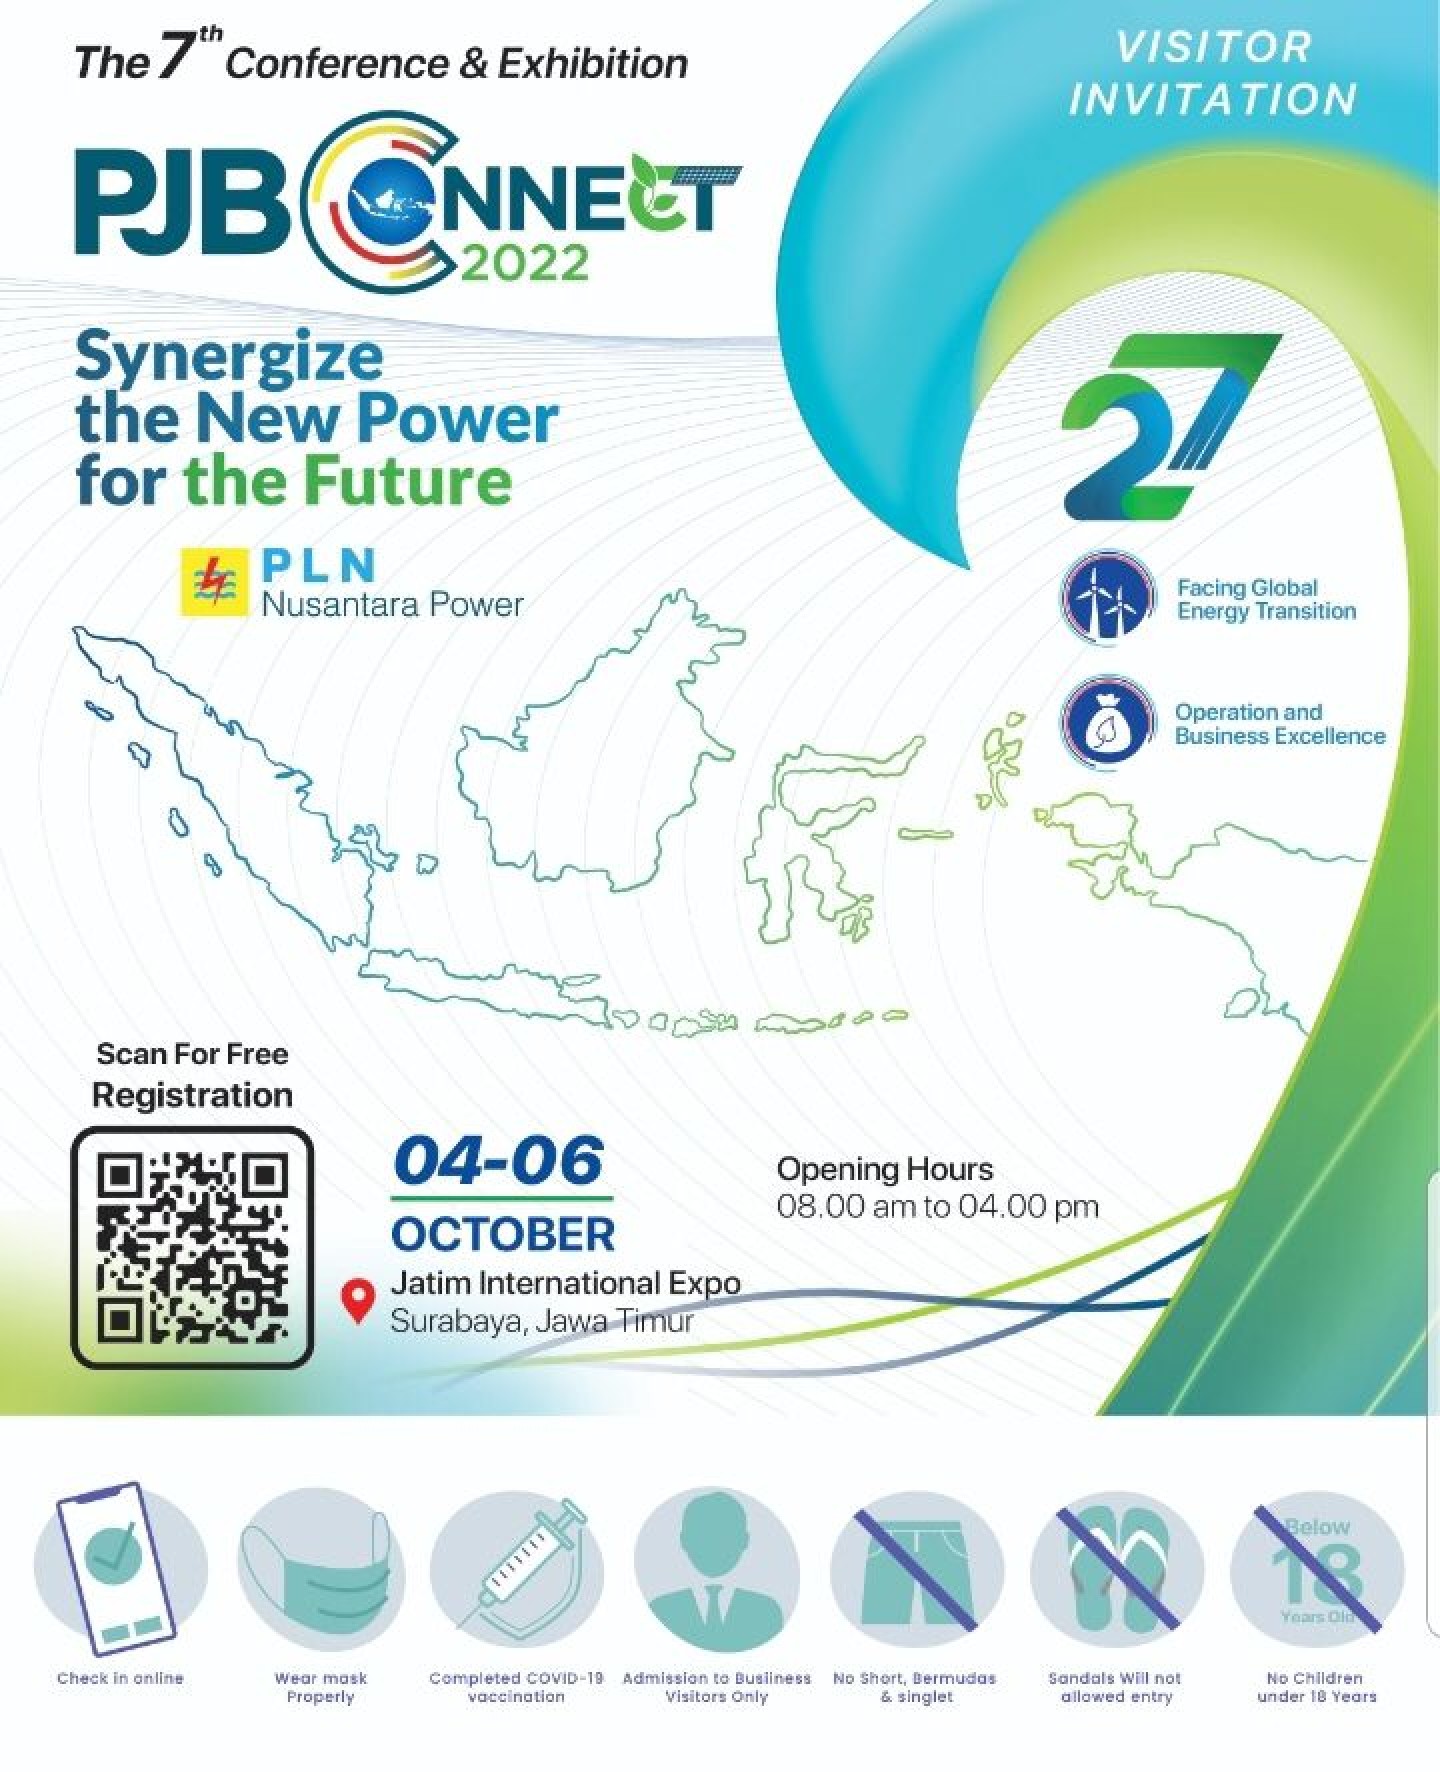 PJB Connect